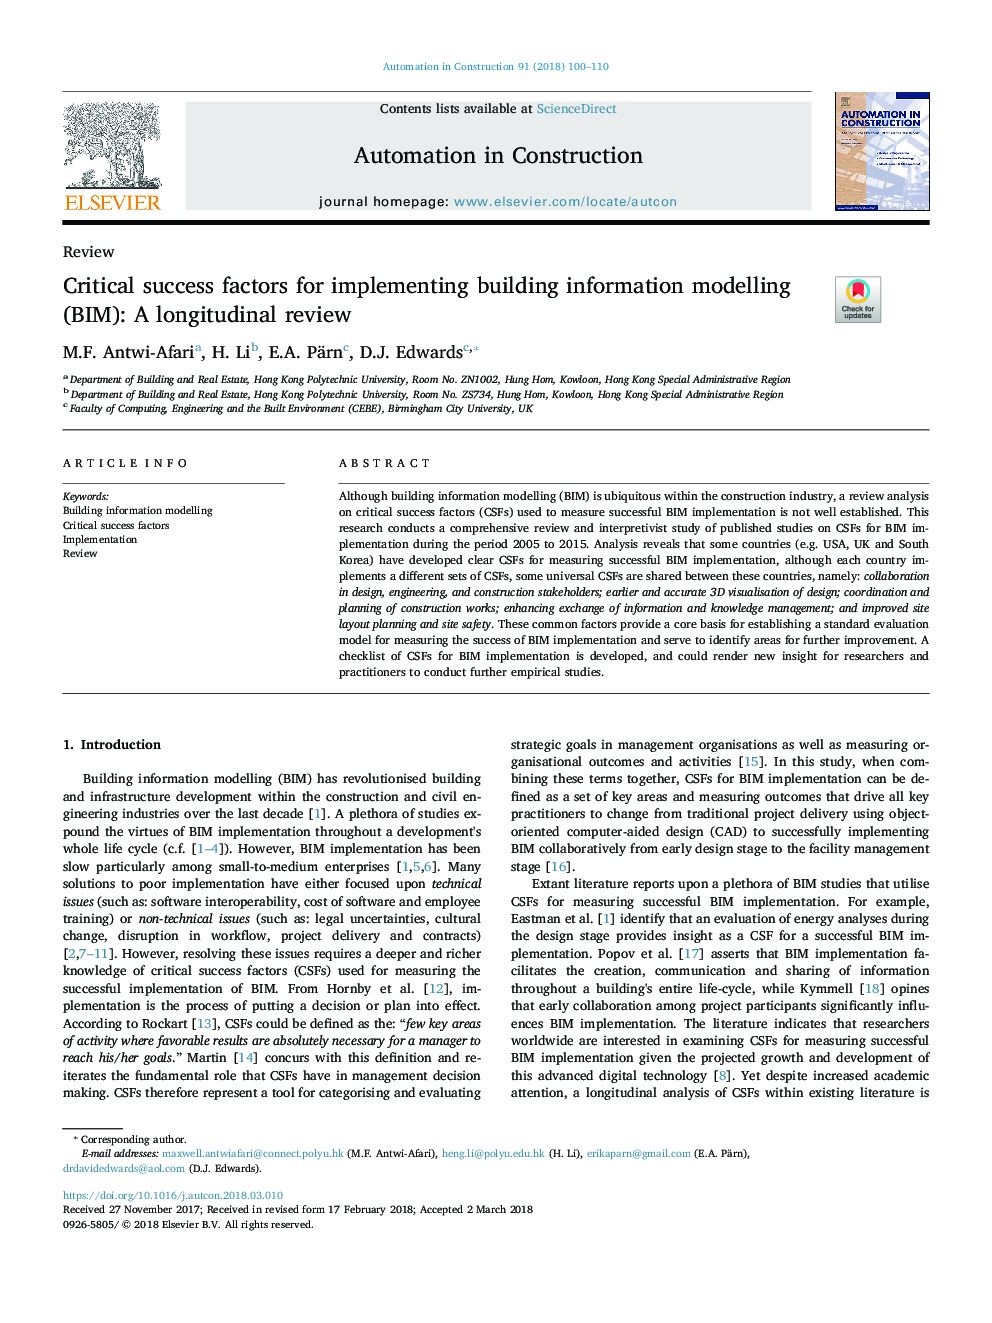 Critical success factors for implementing building information modelling (BIM): A longitudinal review